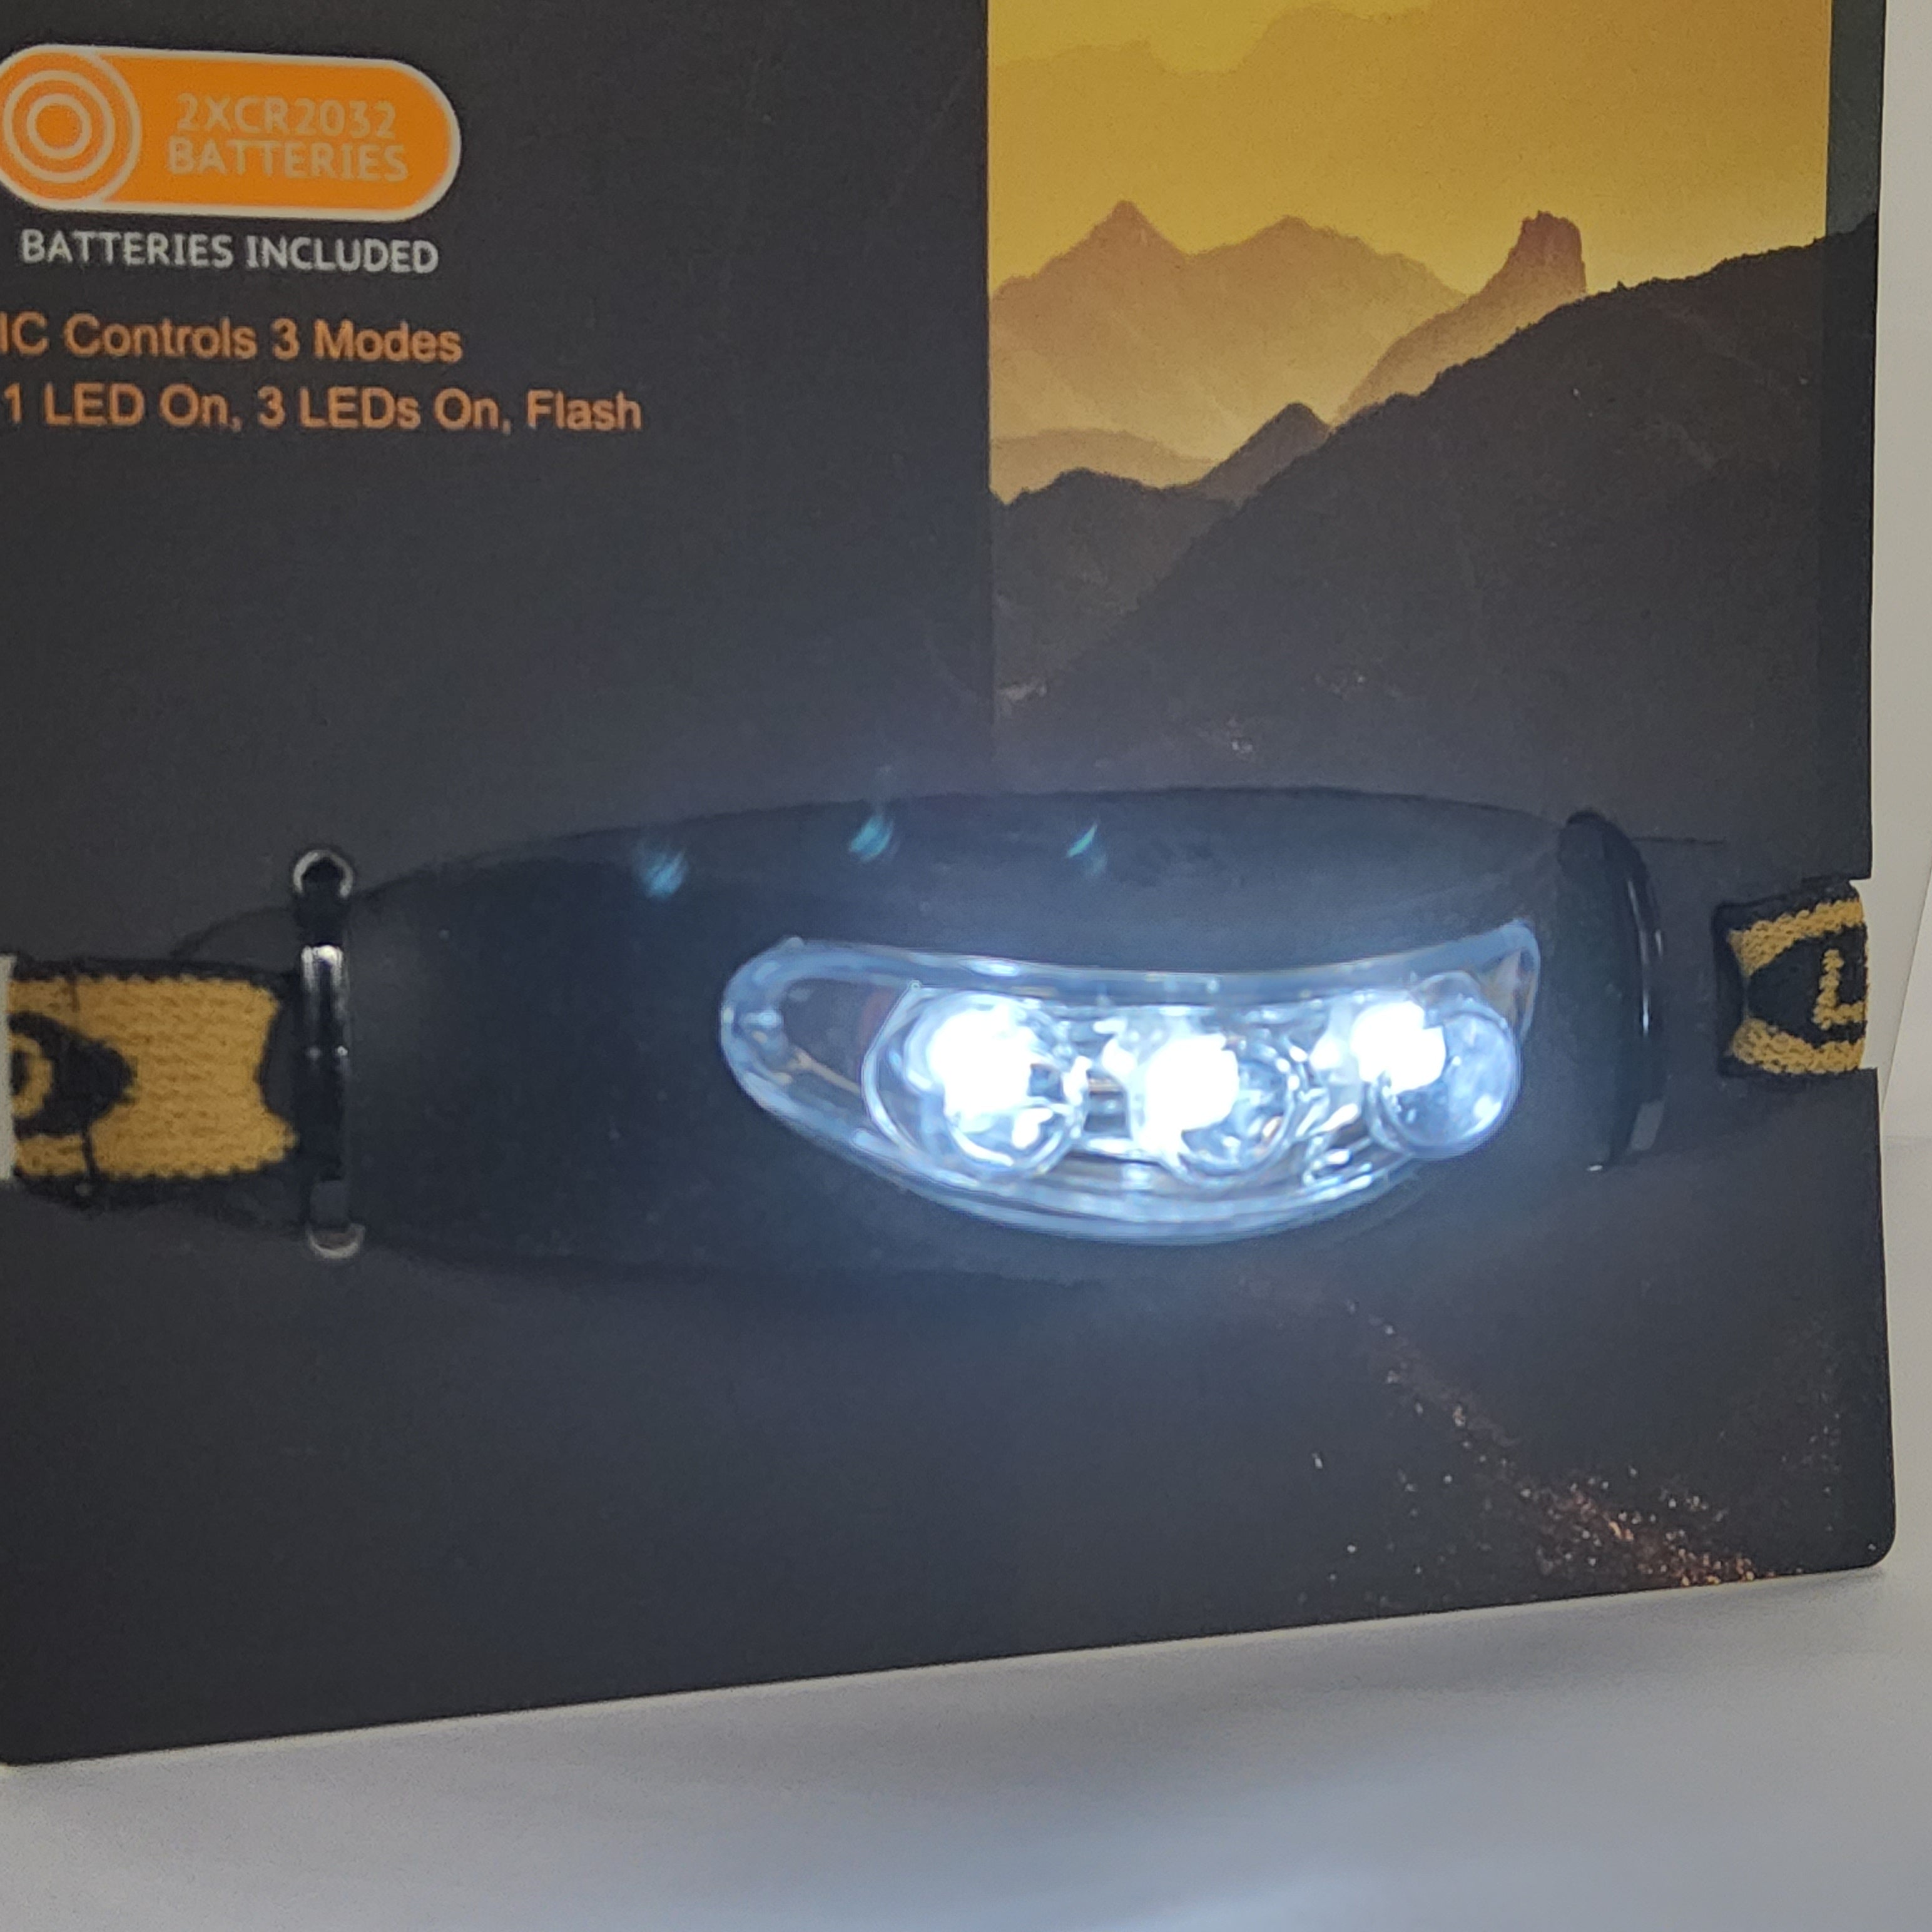 Ace Camp Ultralite 3-LED Headlight 1016